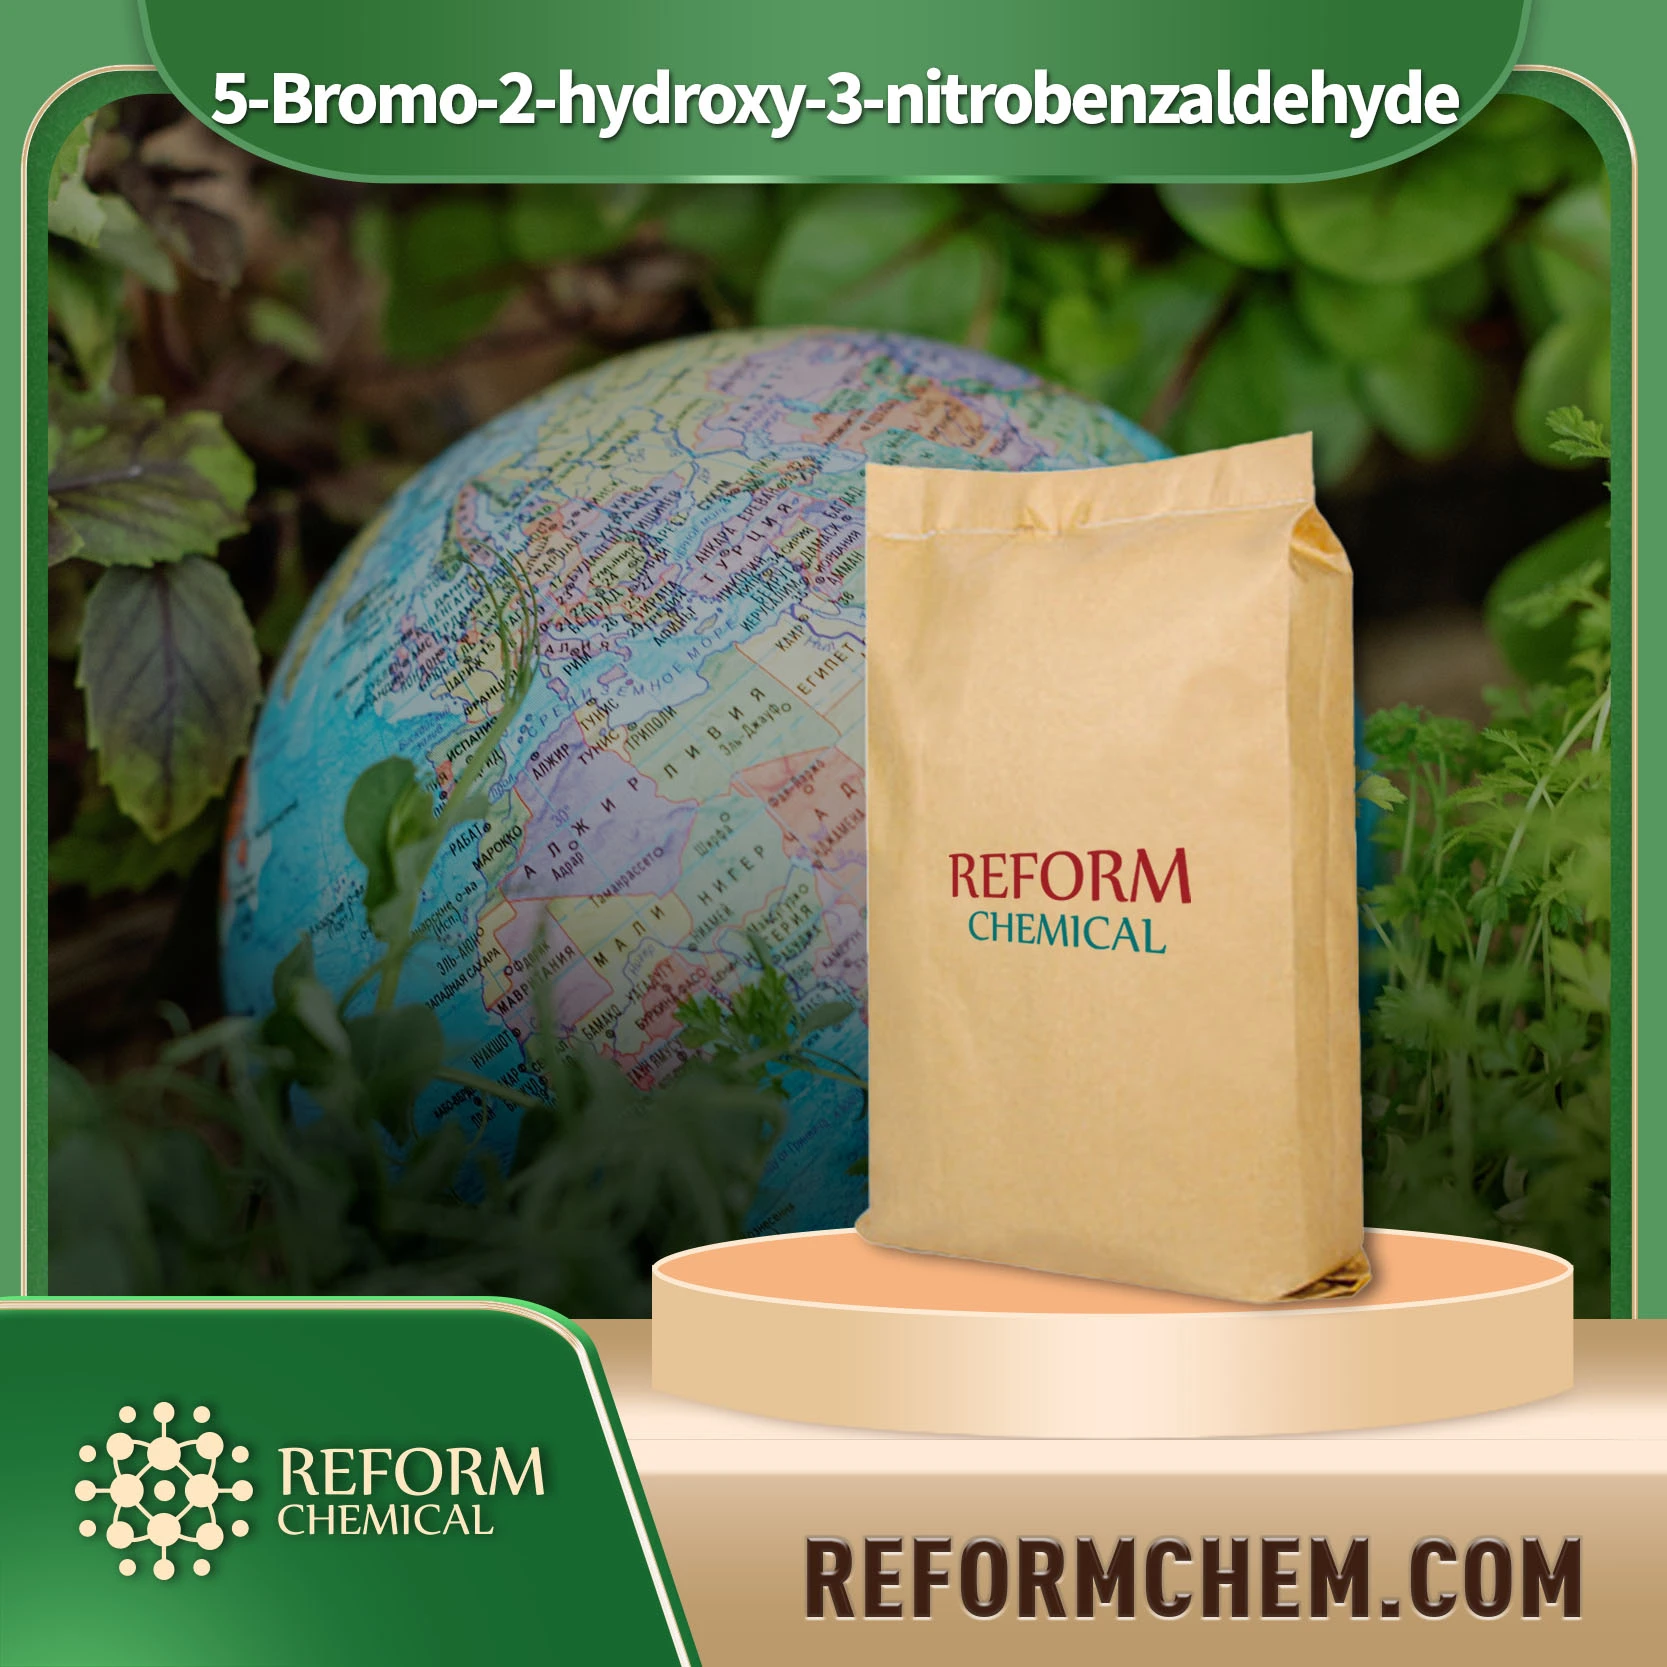 5-Bromo-2-hydroxy-3-nitrobenzaldehyde